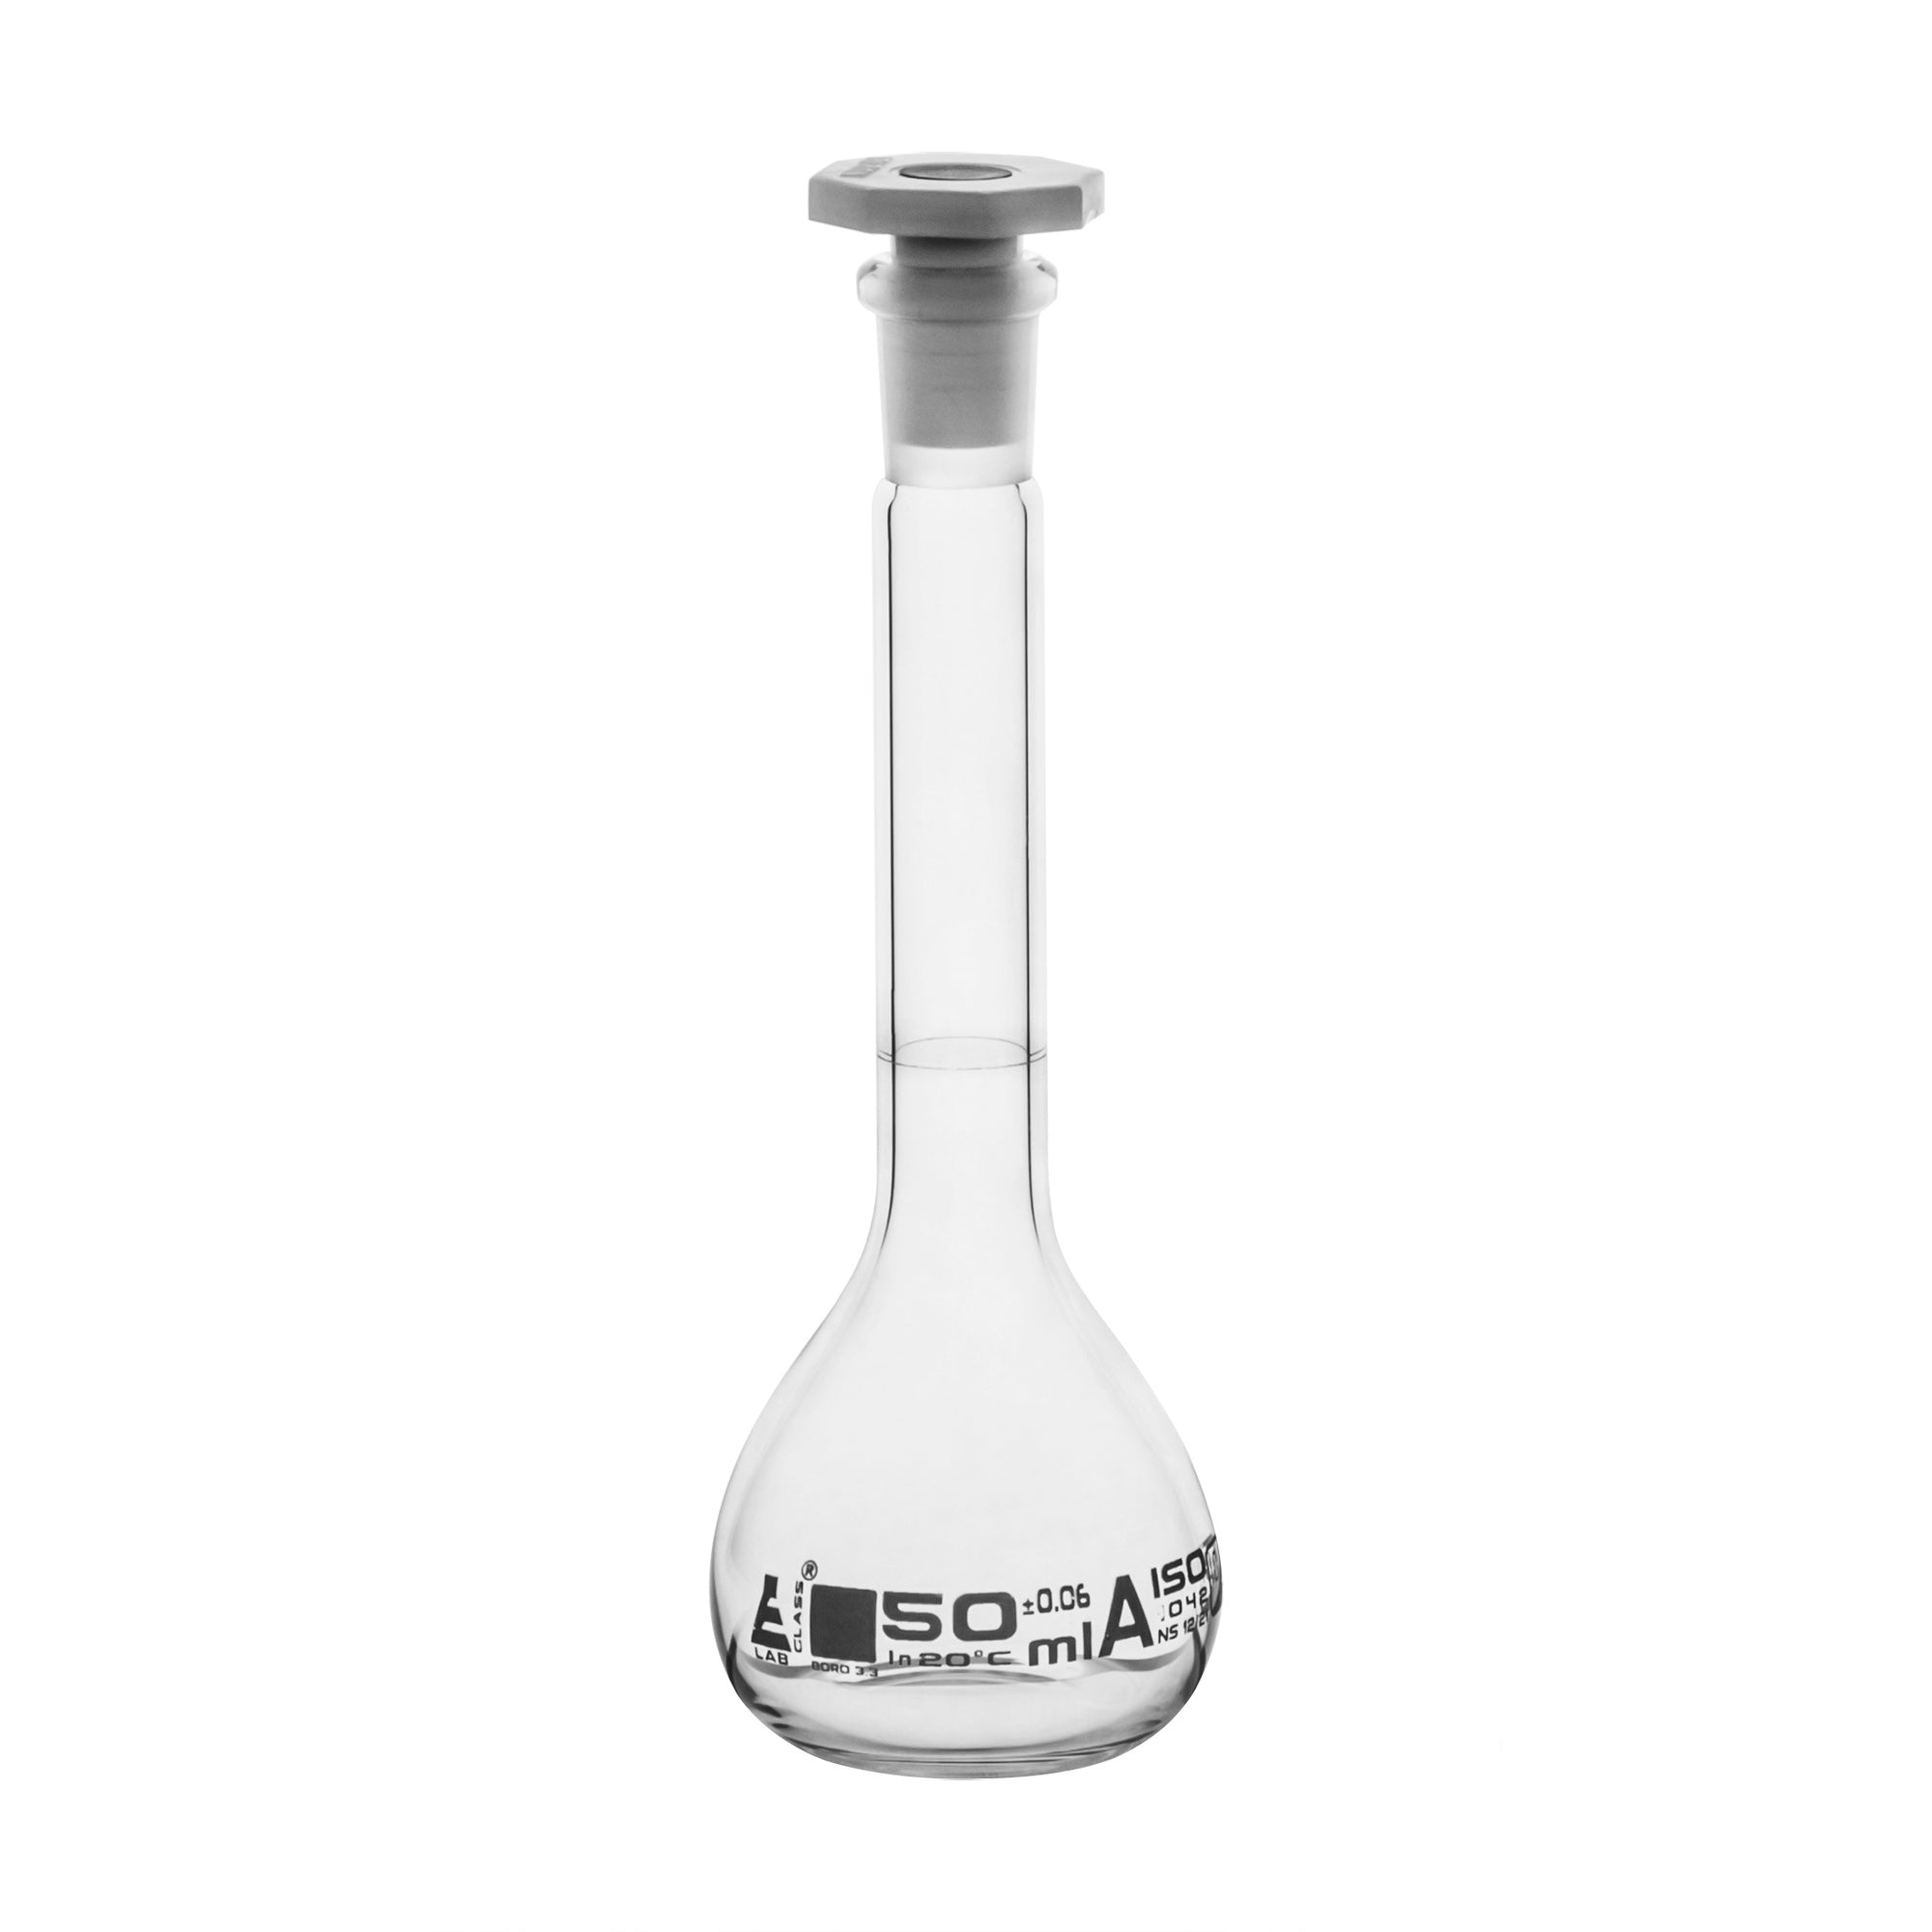 Borosilicate Glass Volumetric Flask with Polyethylene Stopper, 50ml, Class A, White Print, Autoclavable